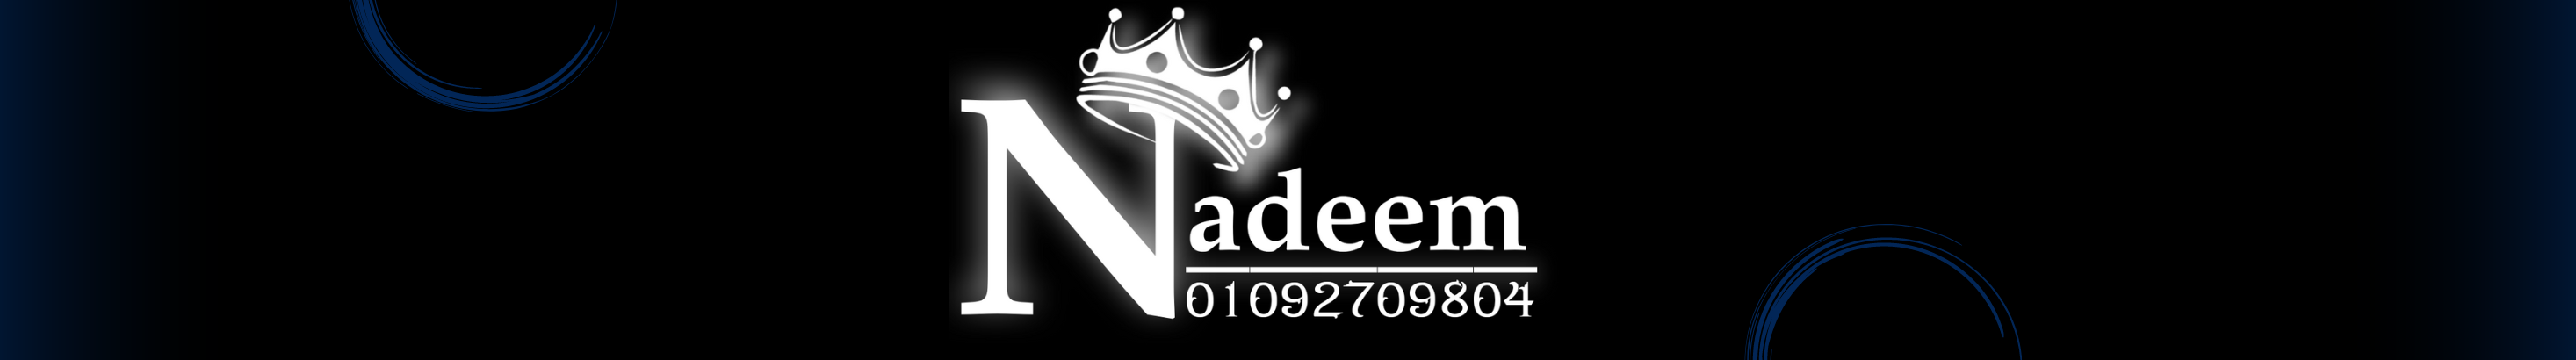 Nadeem Bassem profil başlığı